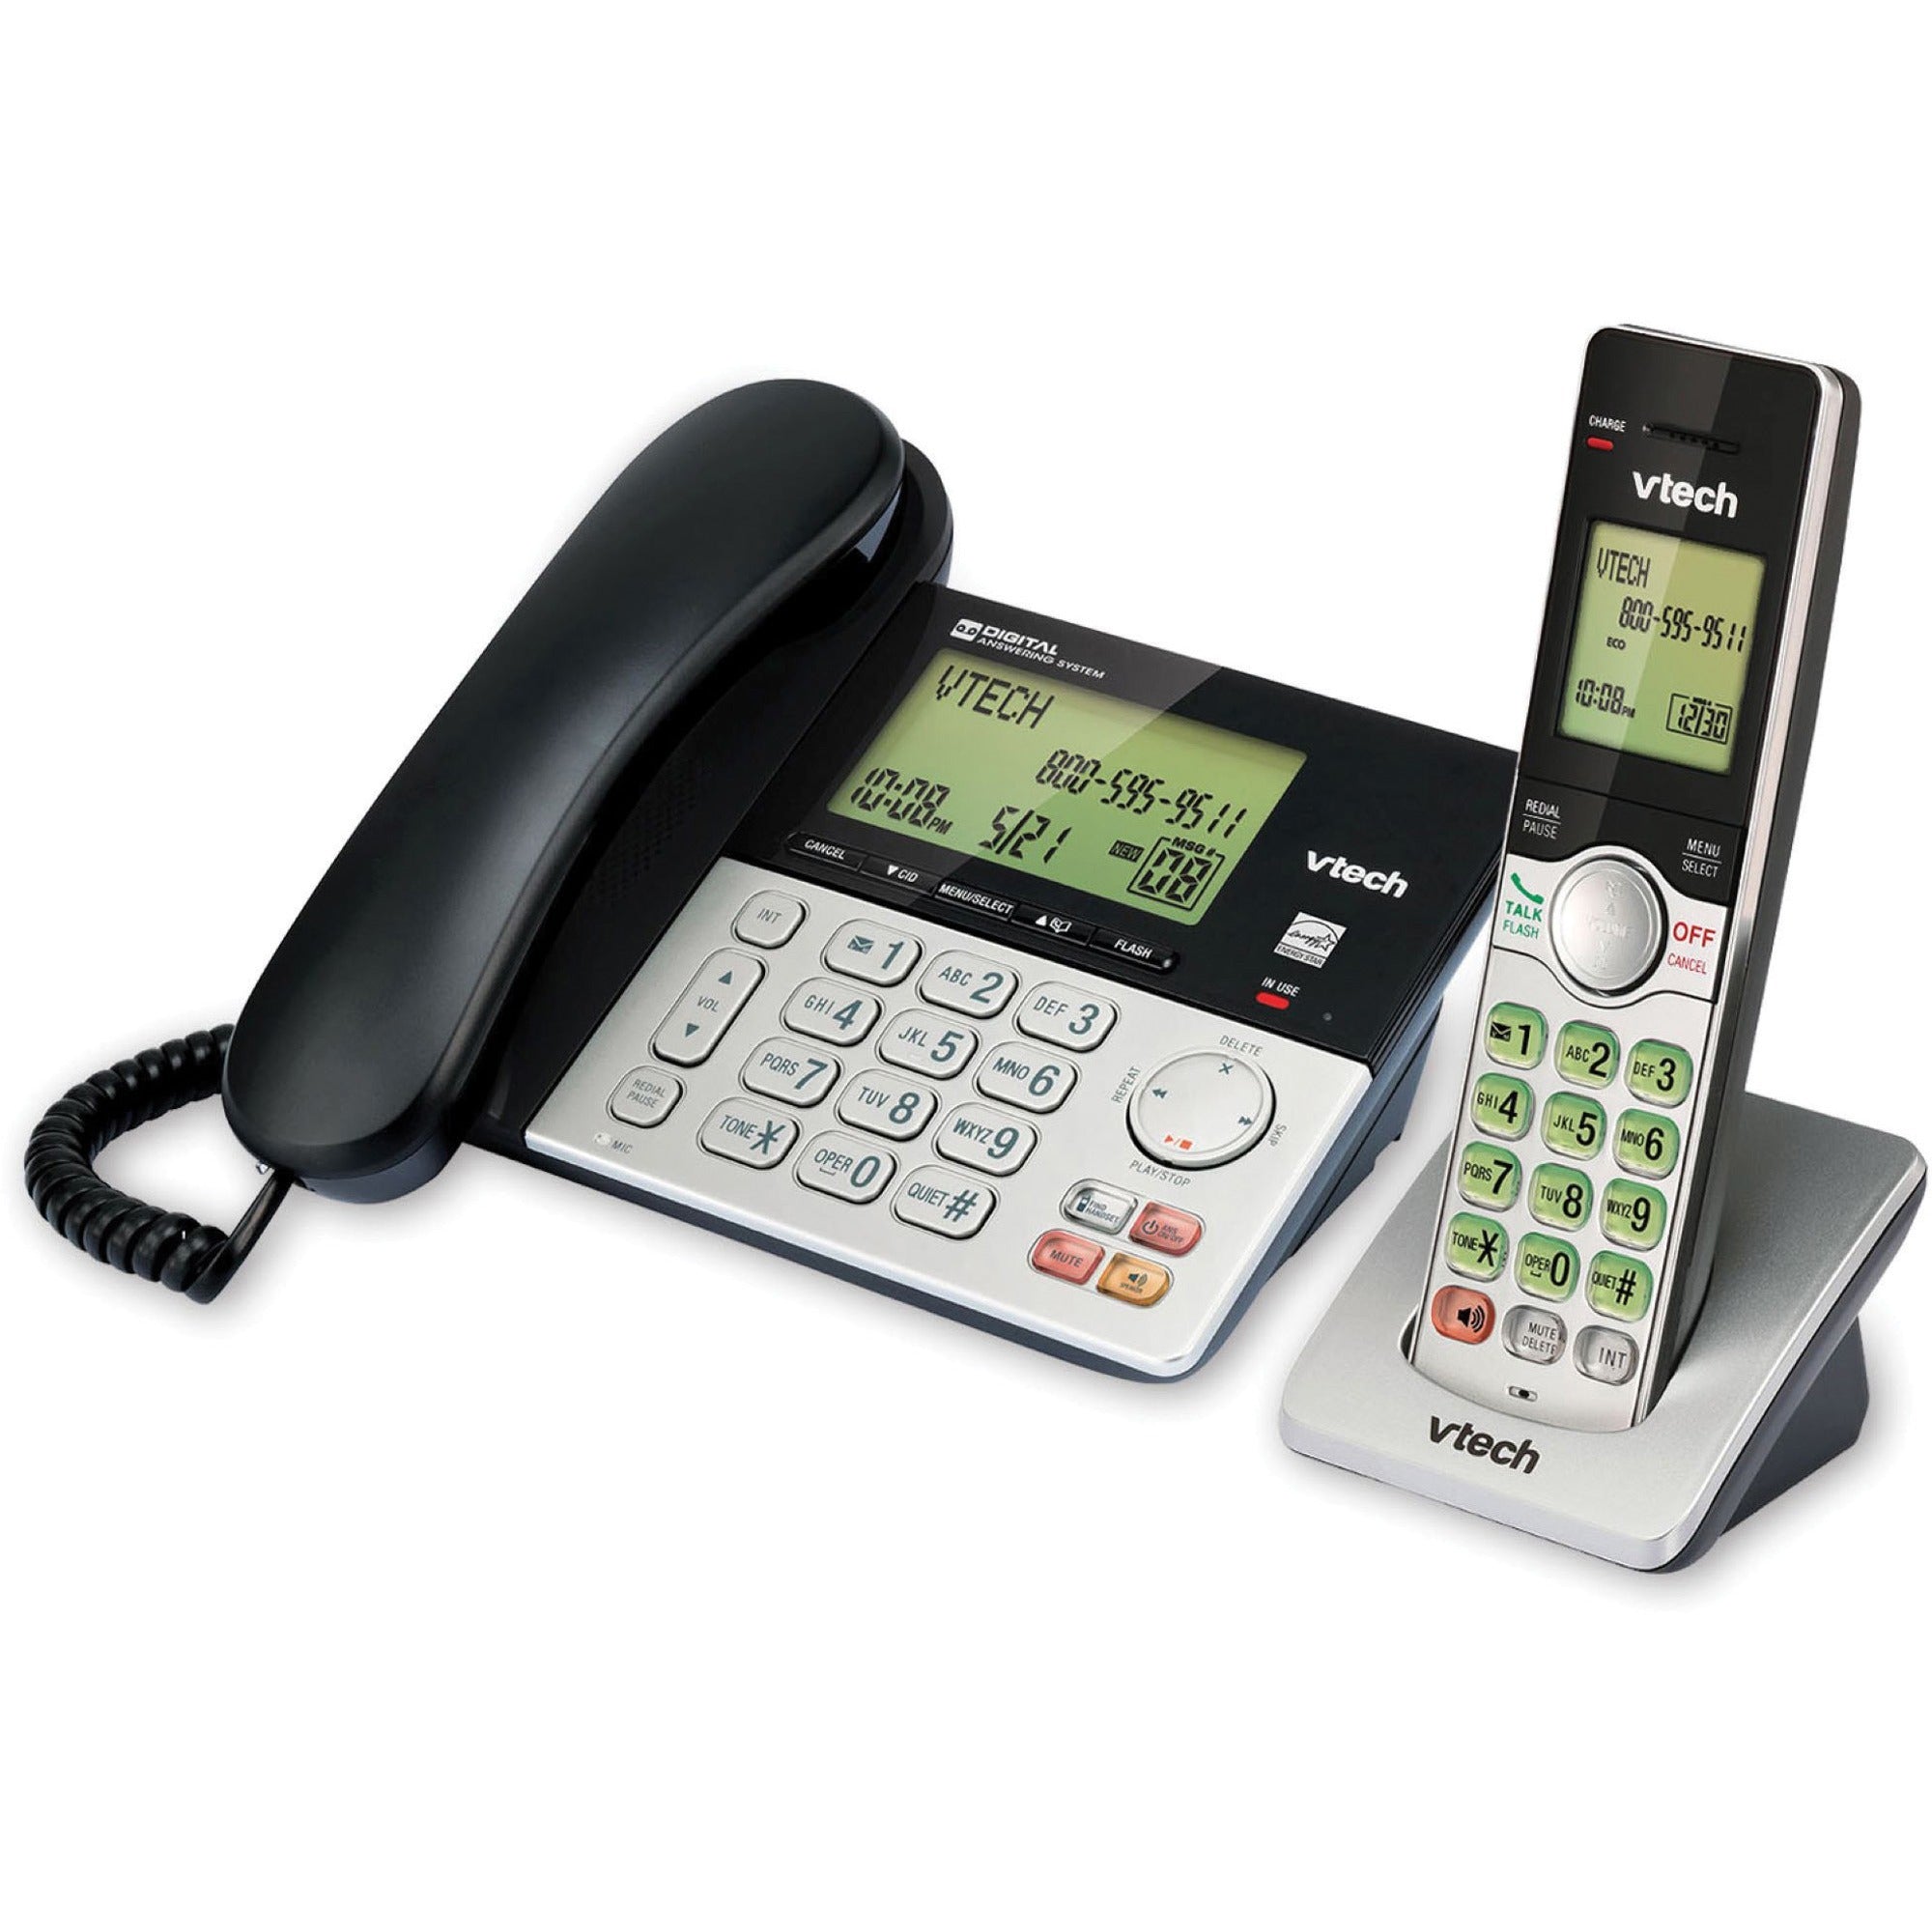 vtech-cs6949-dect-60-standard-phone-black-silver-cordless-corded-1-x-phone-line-speakerphone-answering-machine-hearing-aid-compatible_vtecs6949 - 2